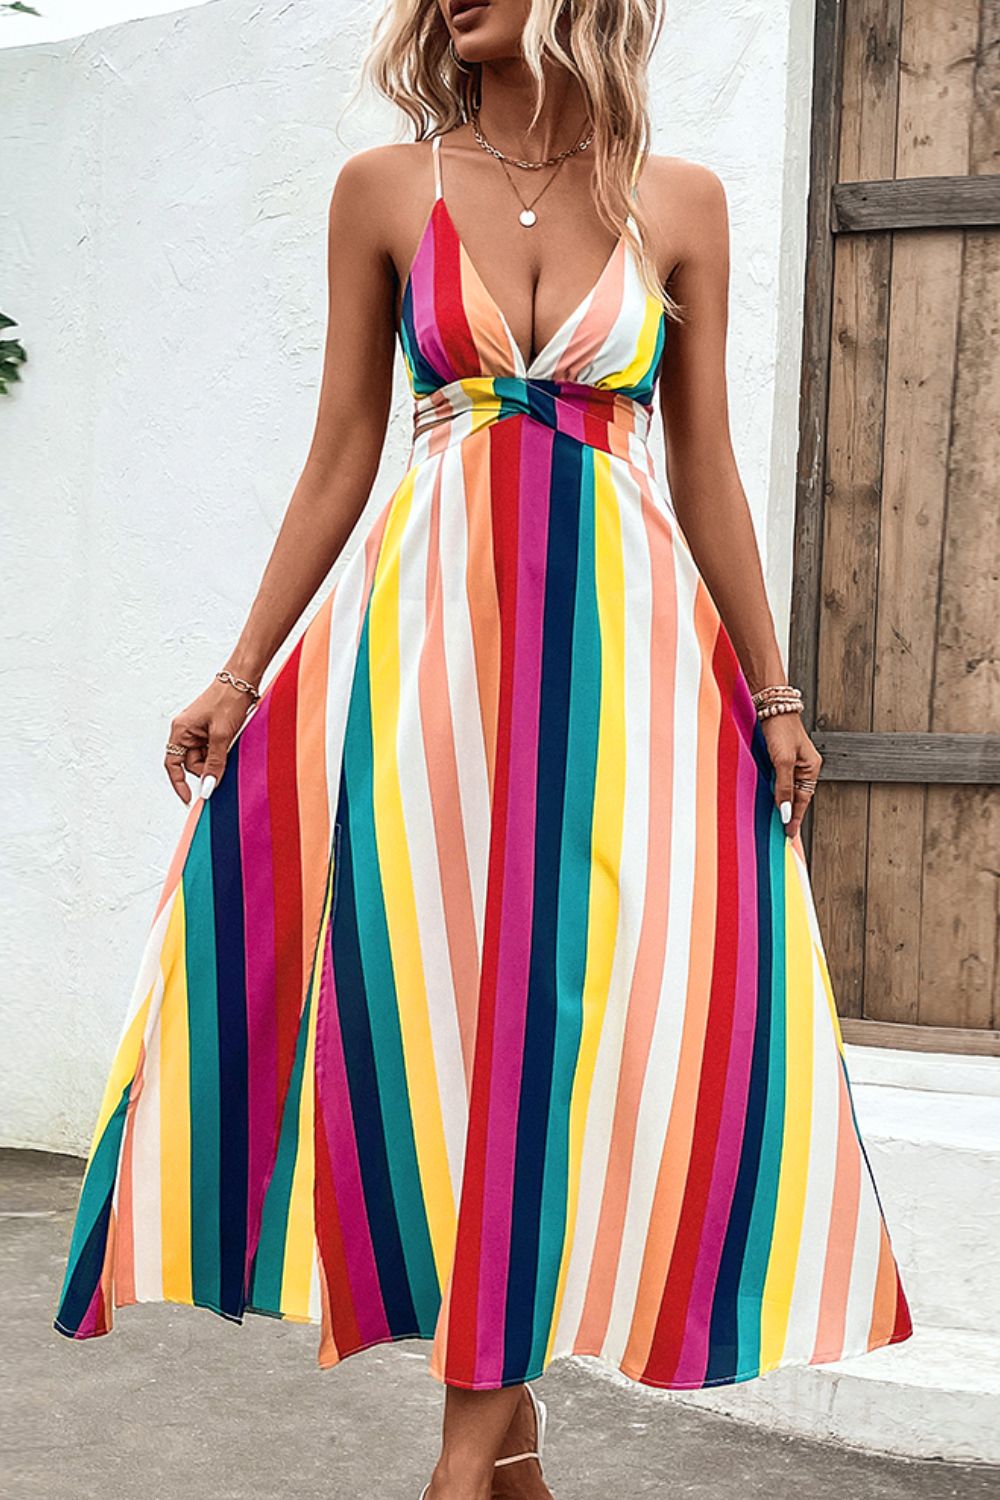 Rainbow Dress With Crisscross Straps